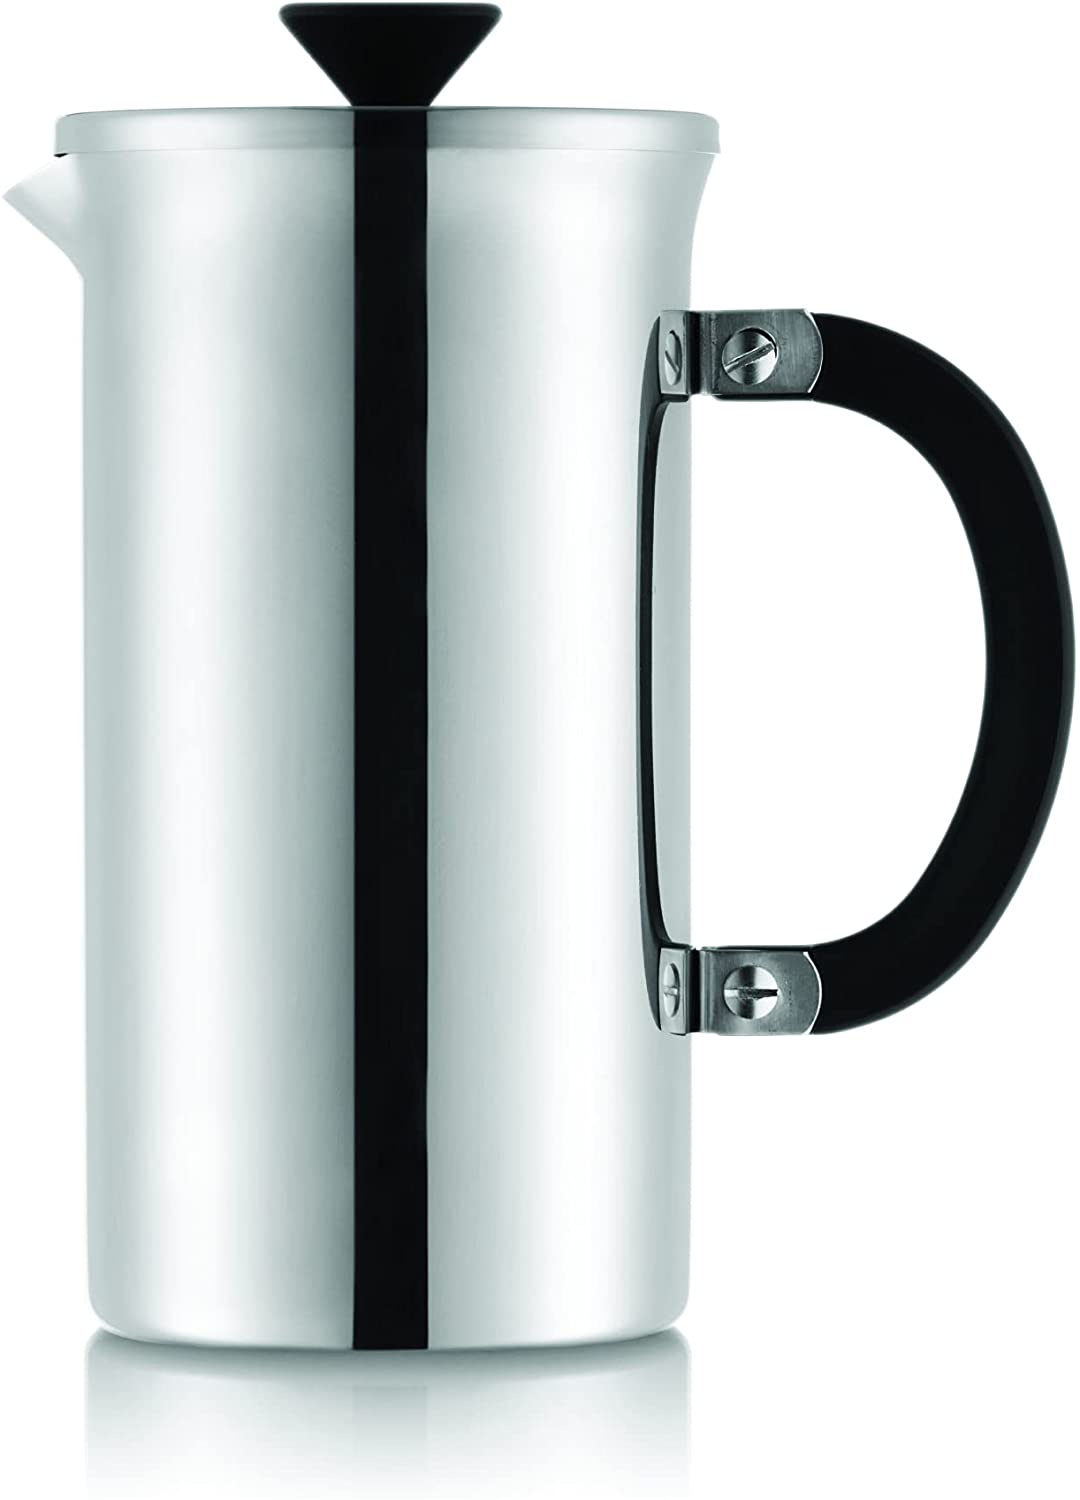 Bodum Tribute Stainless Steel Coffee Maker, 100 ml, Chrome